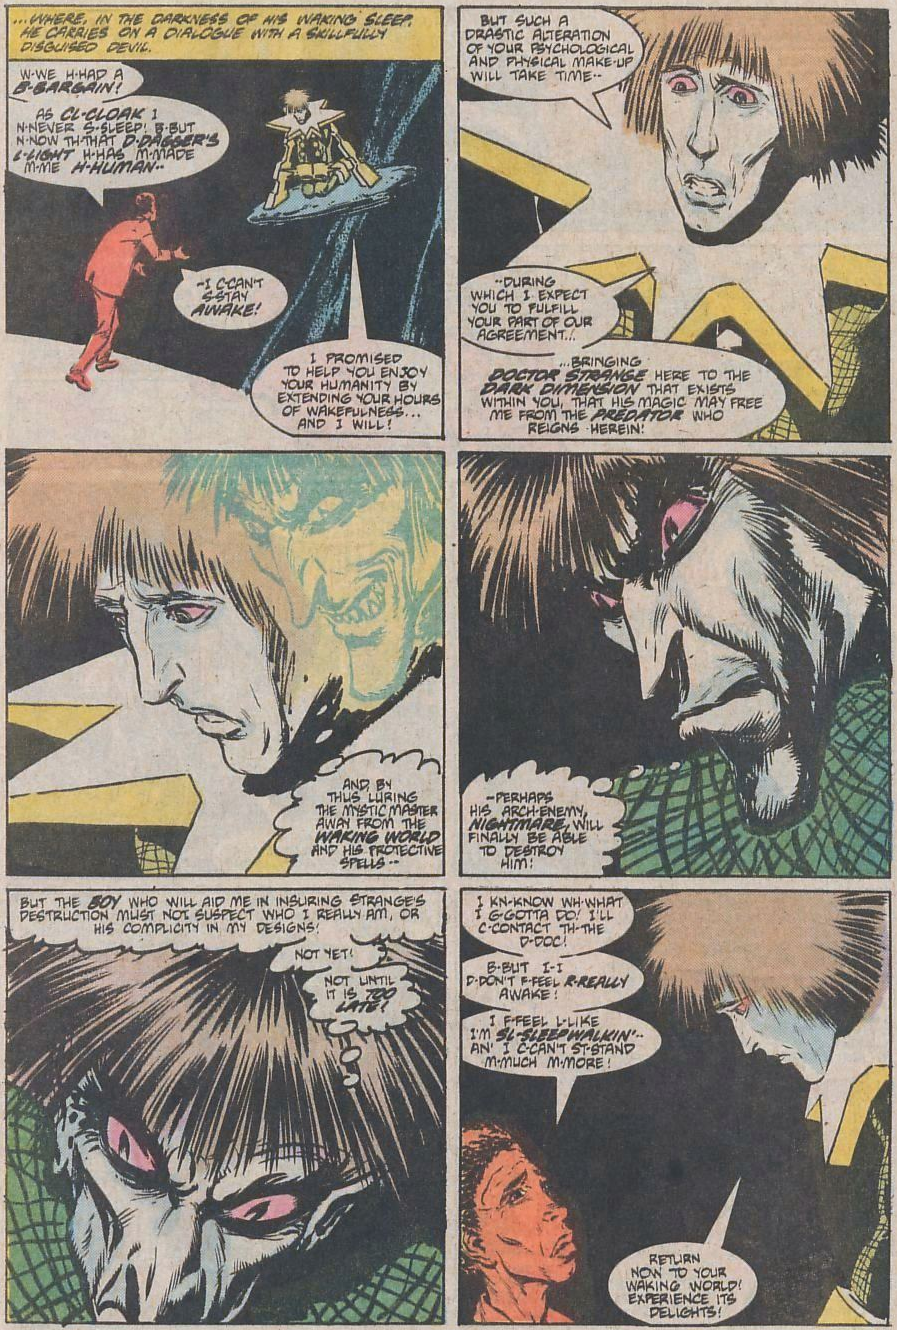 Nightmare plays with Cloak's emotions in Strange Tales Vol. 2 #5 "Vermin" (1987), Marvel Comics. Words by Bill Mantlo, art by Bret Blevins, Glynis Oliver, and Ken Bruzenak.